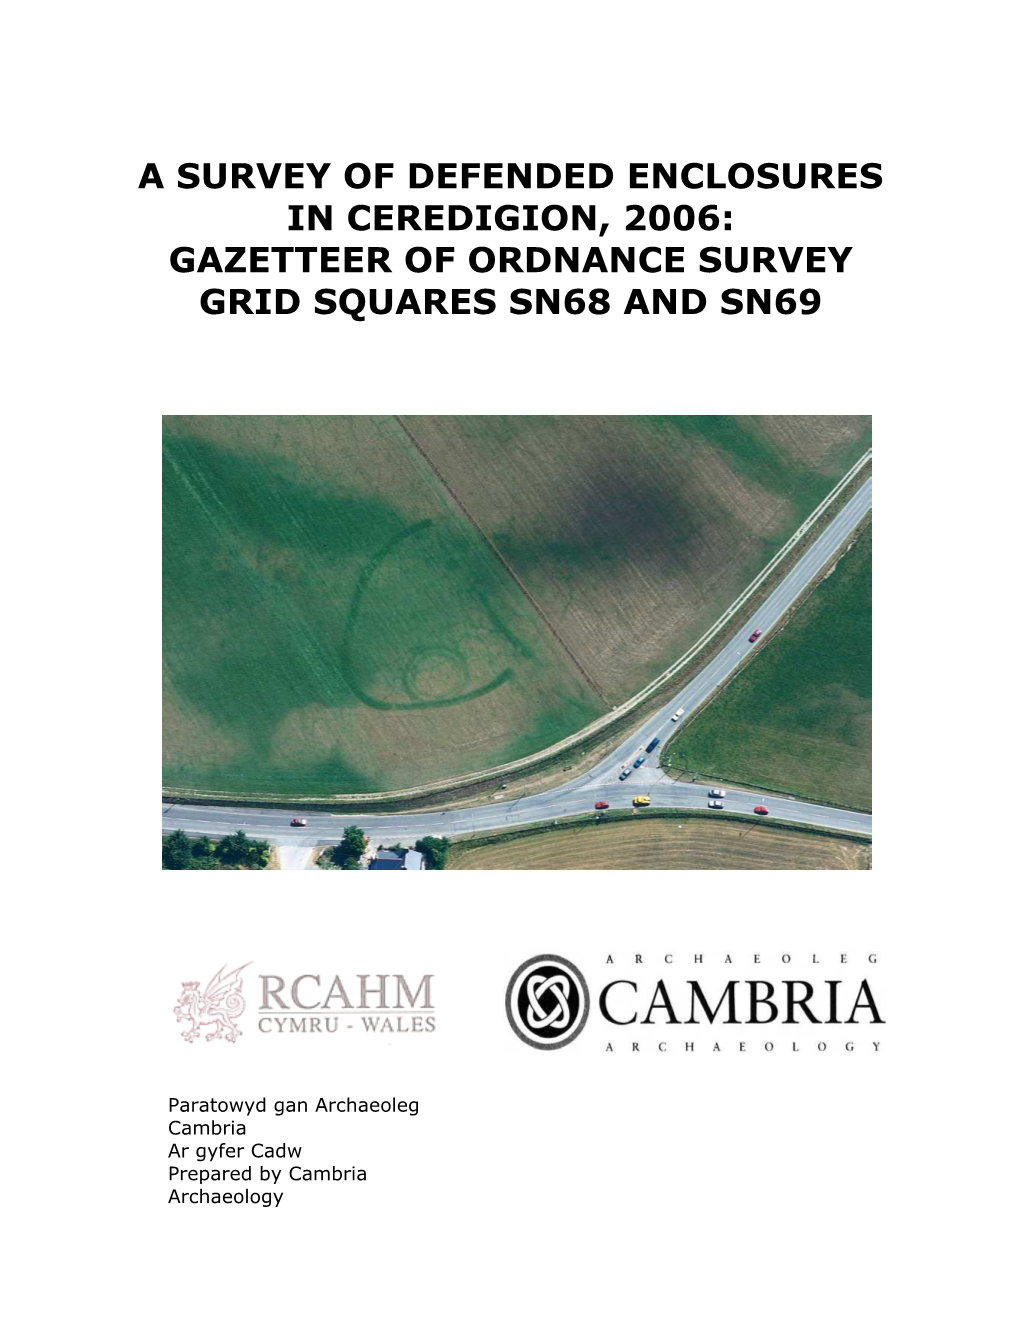 A Survey of Defended Enclosures in Ceredigion, 2006: Gazetteer of Ordnance Survey Grid Squares Sn68 and Sn69